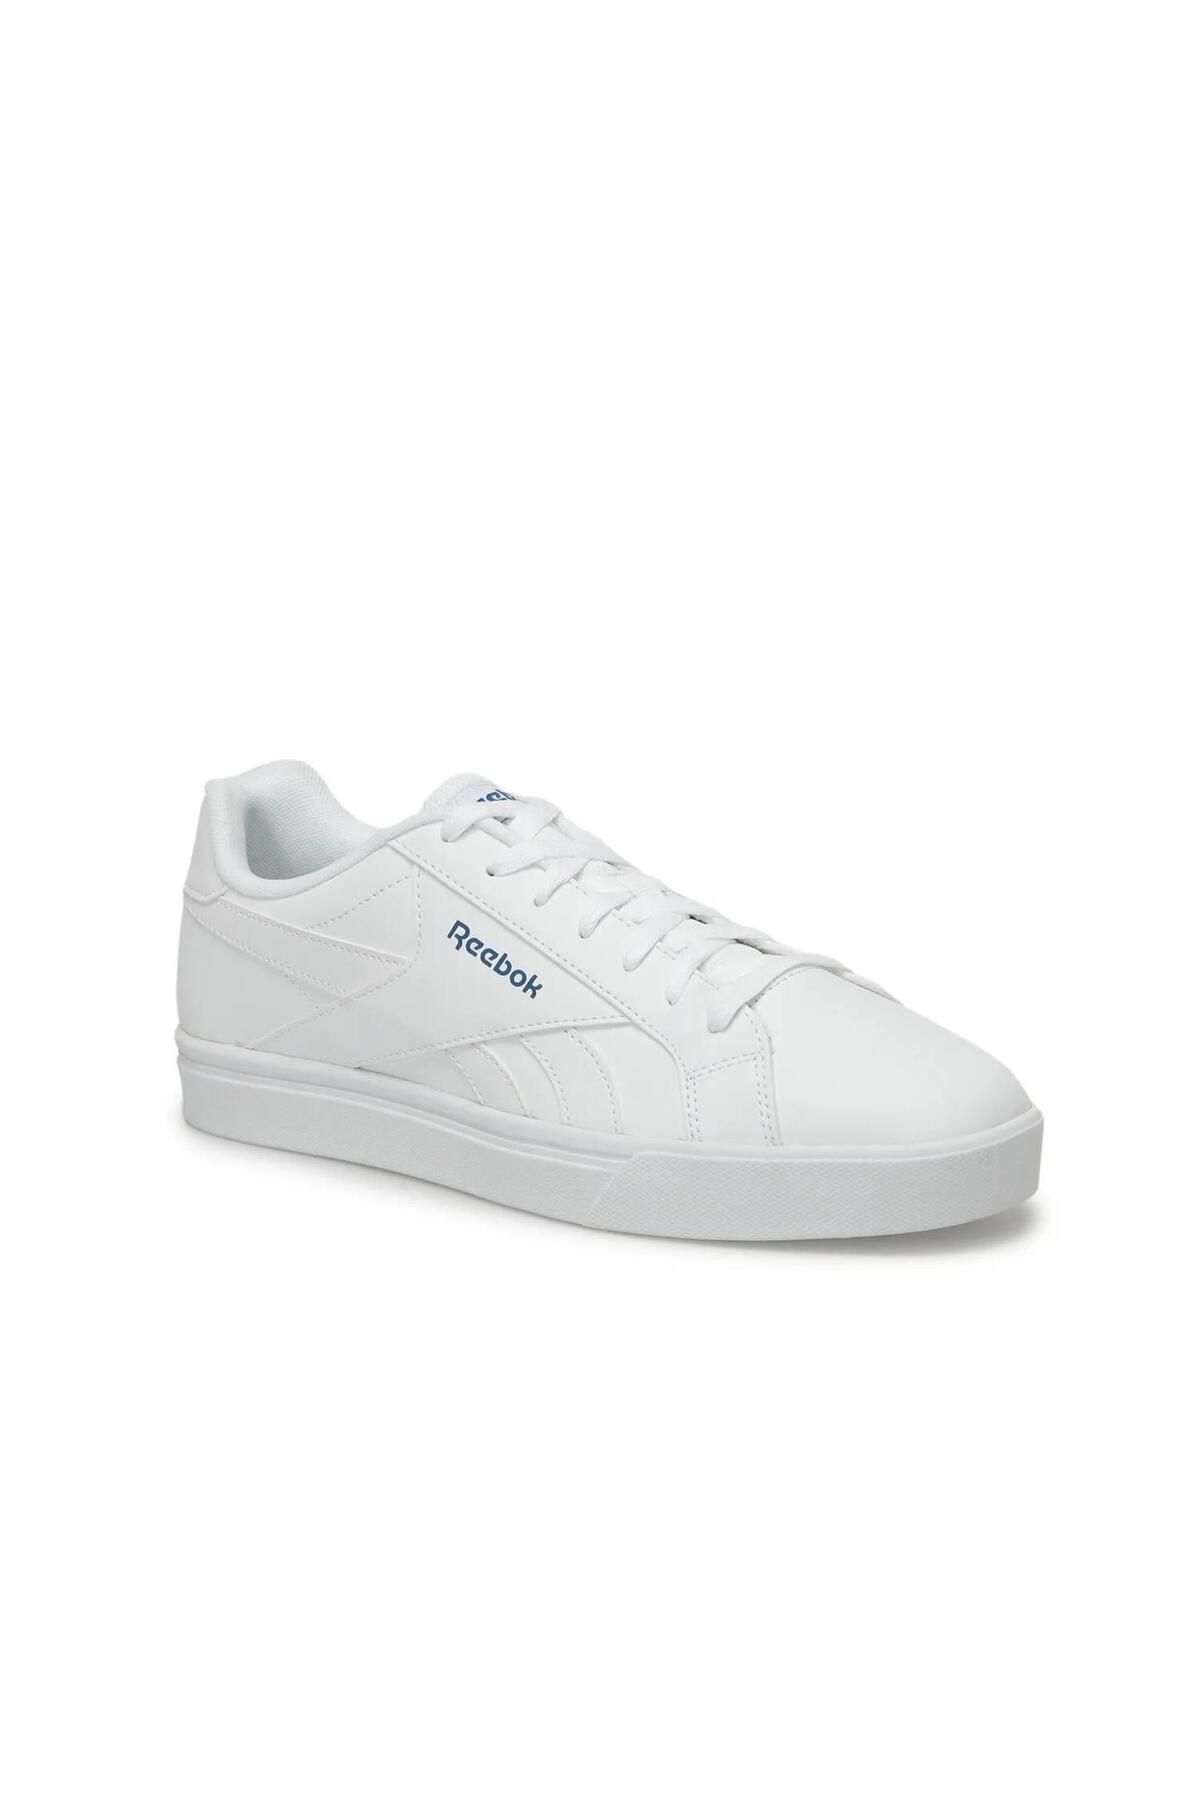 Reebok IG8327 Royal Complete 3low کفش ورزشی سفید